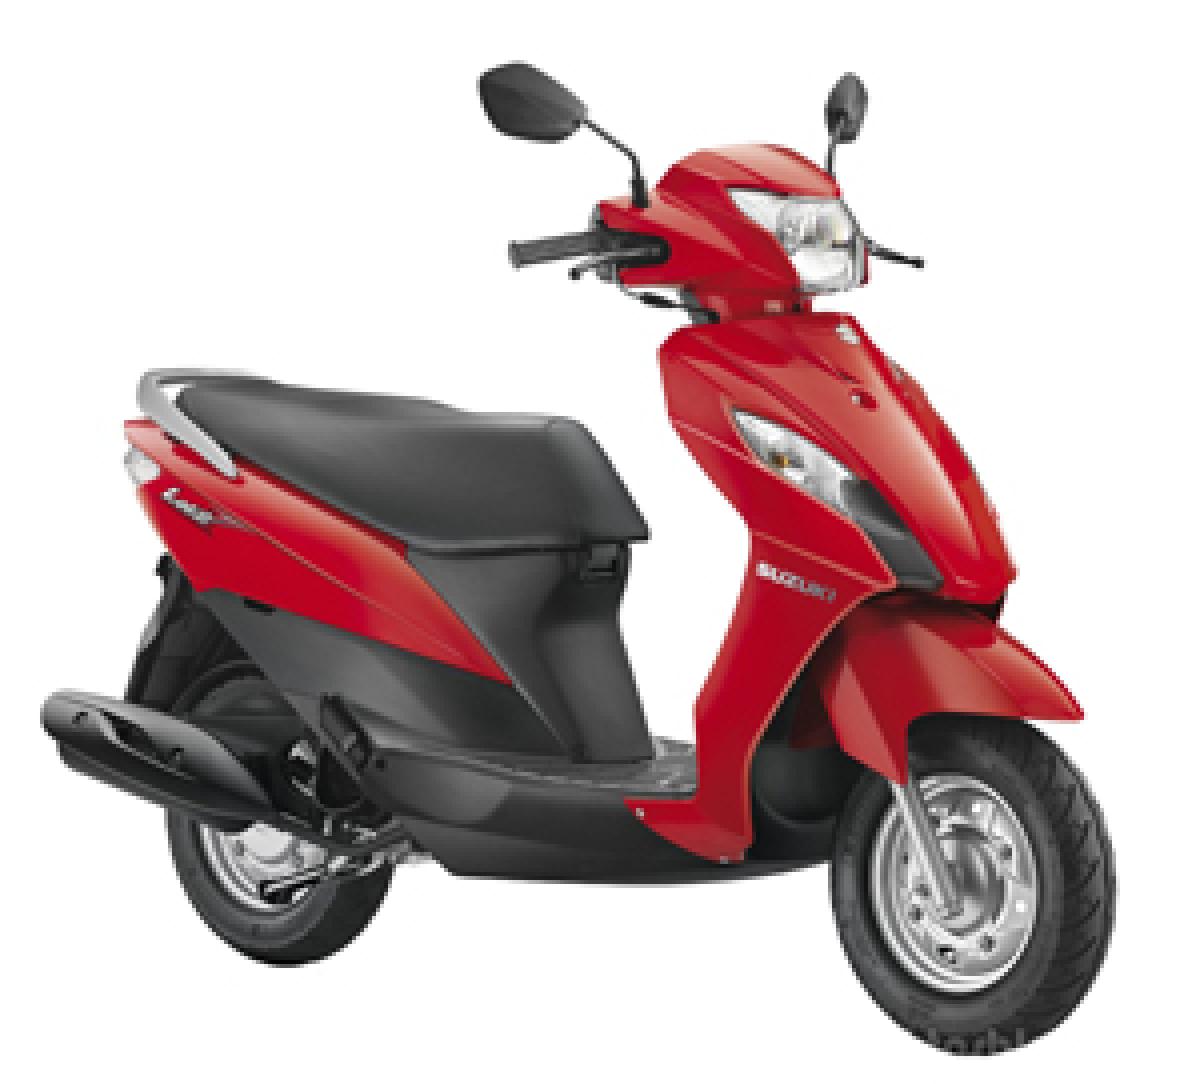 Suzuki announces new colours for Lets scooter